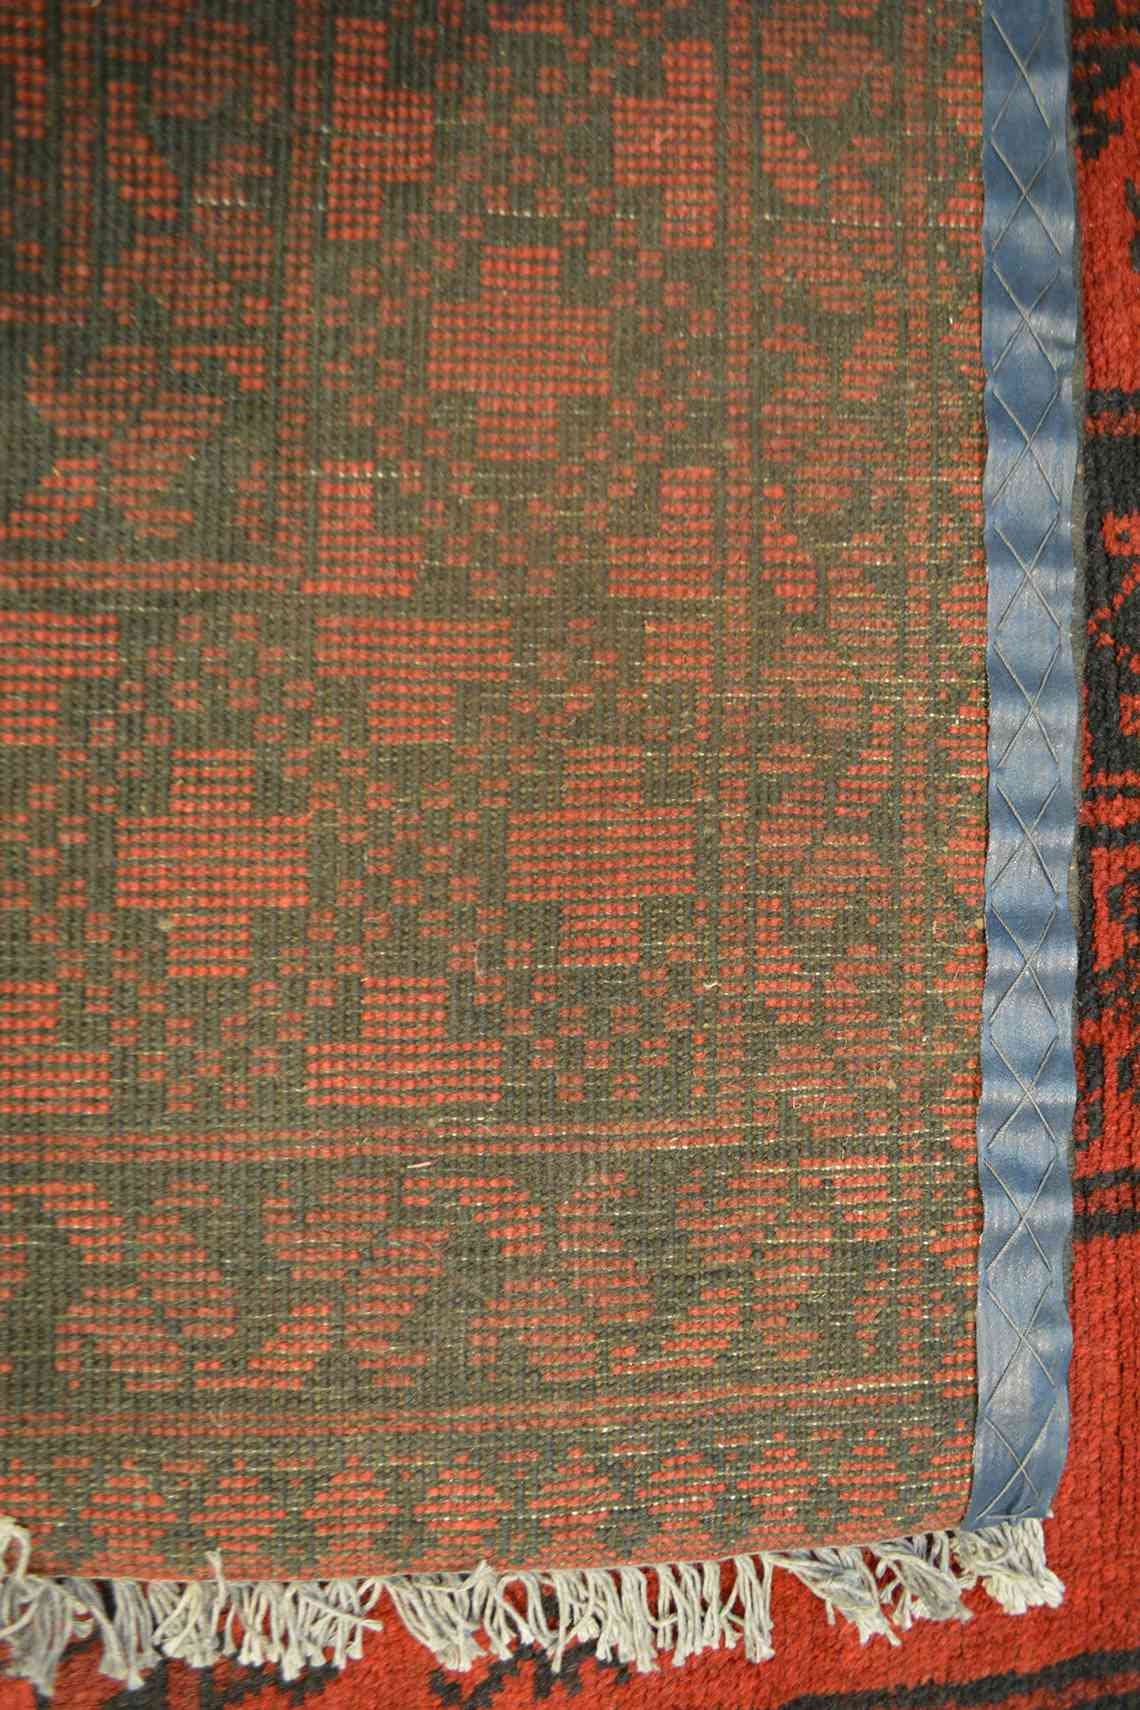 Bokhara Elephant's Foot Turkoman Carpet | 12'7" x 10' | Home Decor | Hand-knotted Wool Area Rug